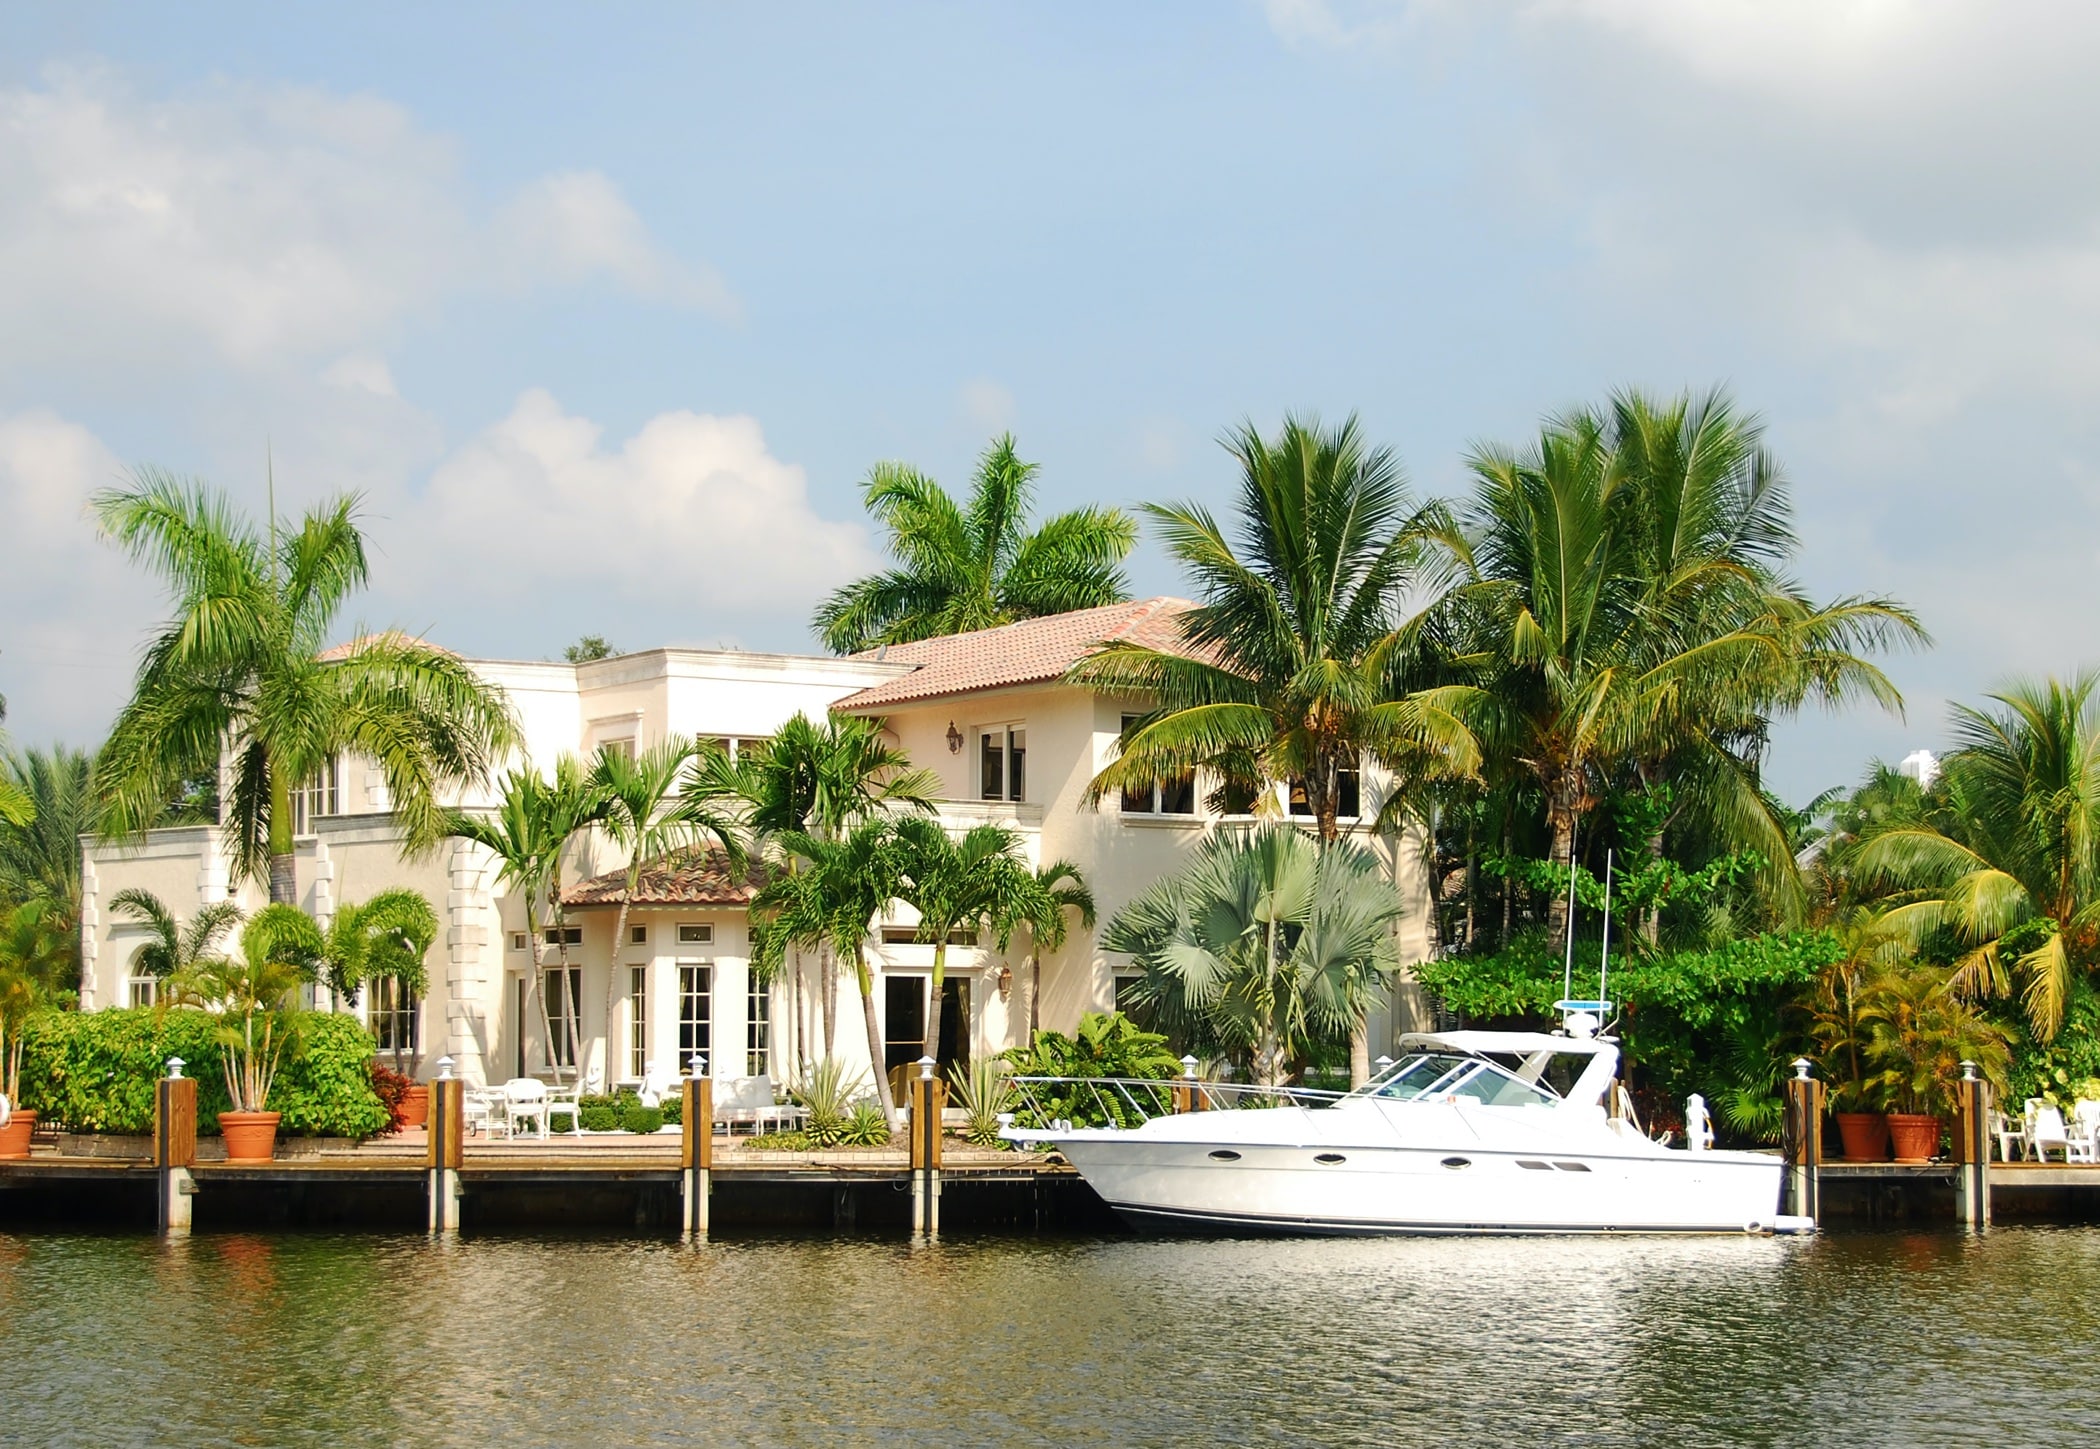 Waterfront mansion in Florida